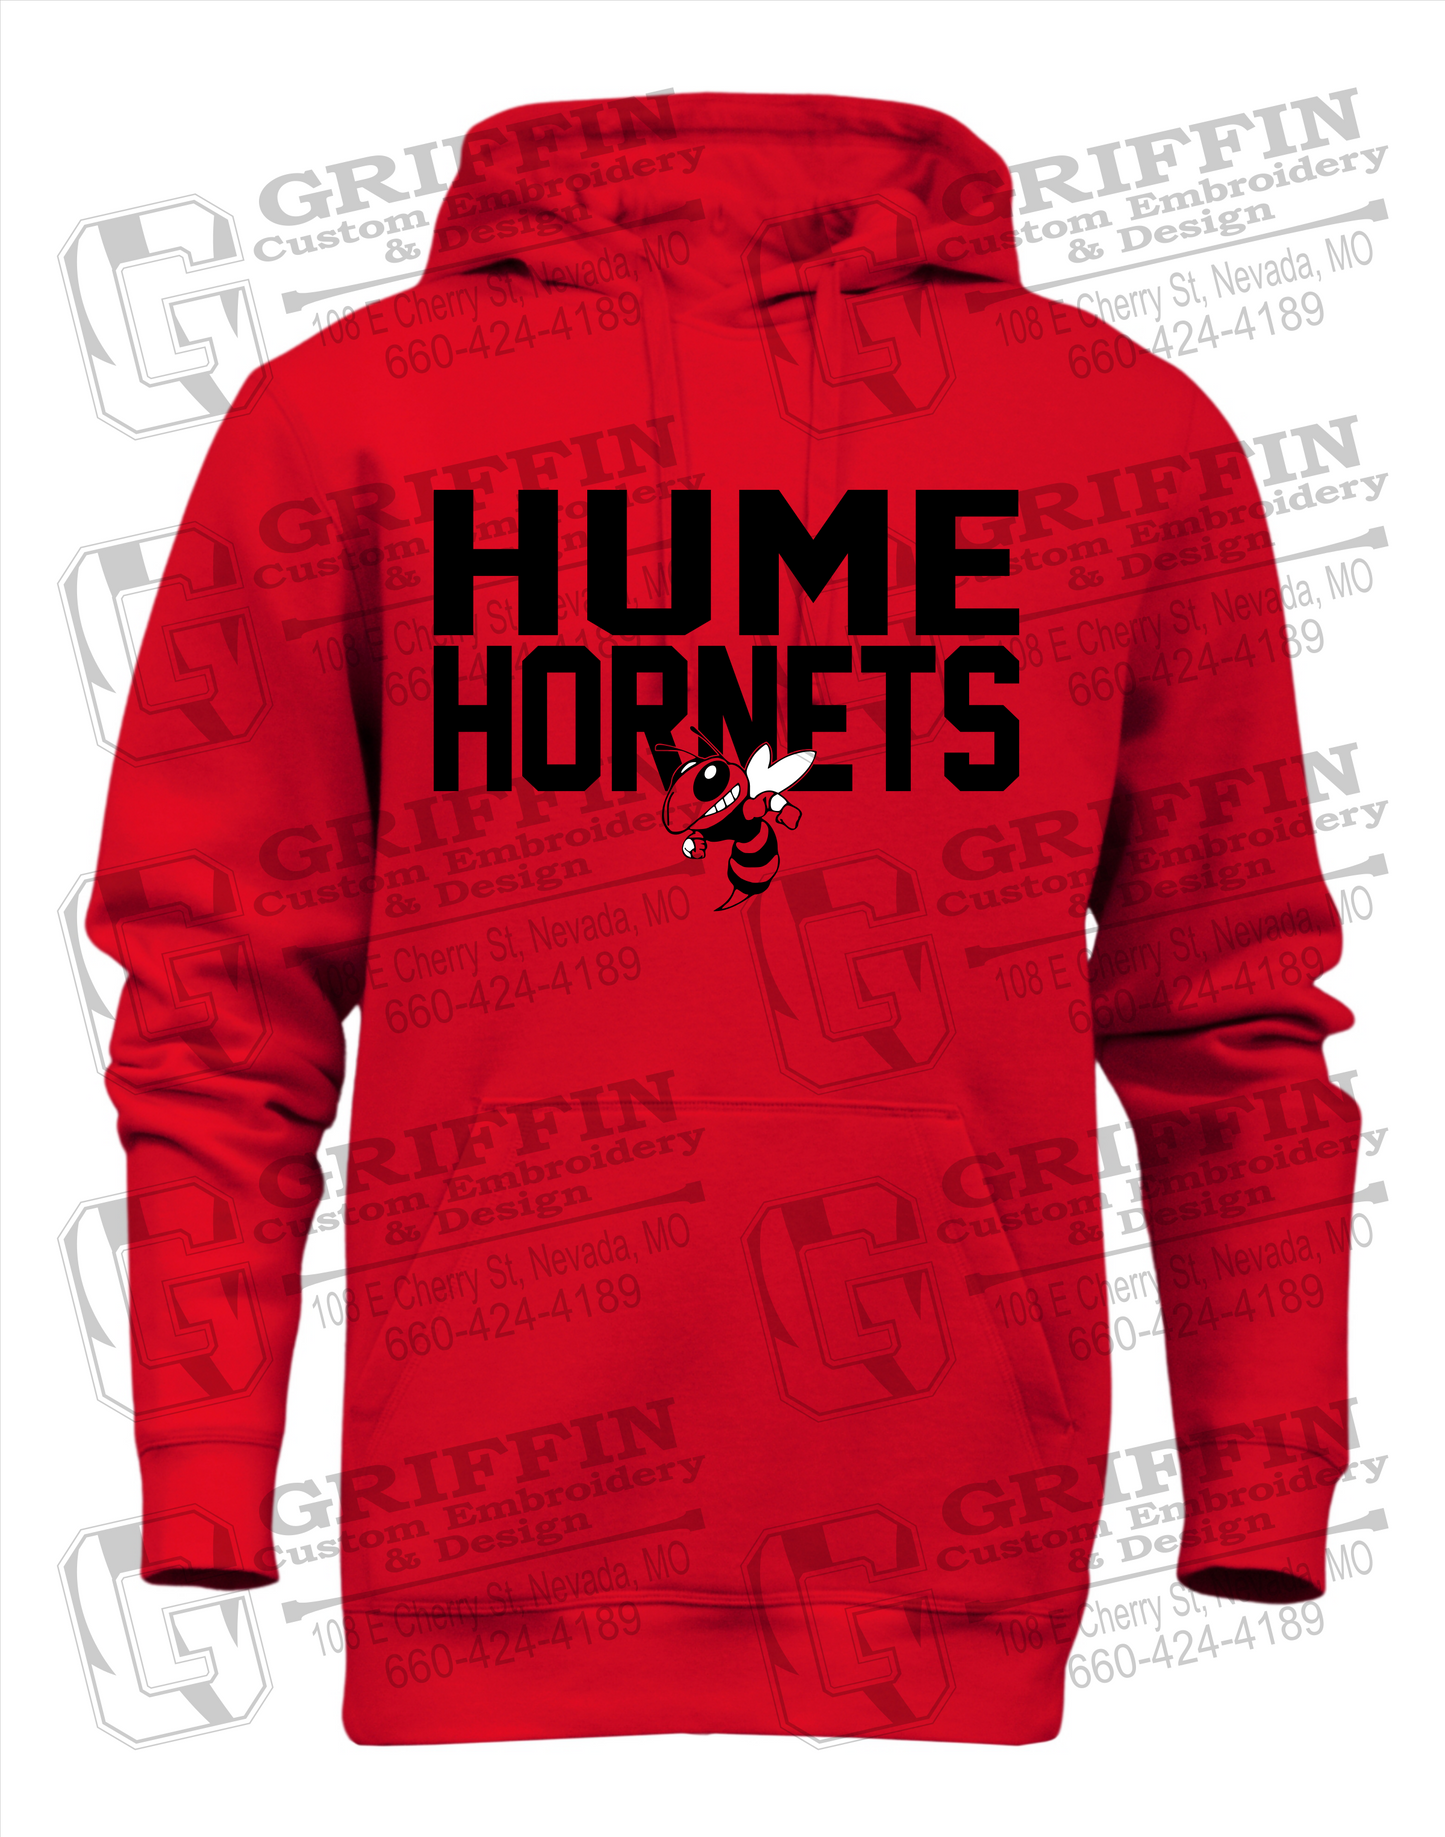 Hume Hornets 23-F Youth Heavyweight Hoodie